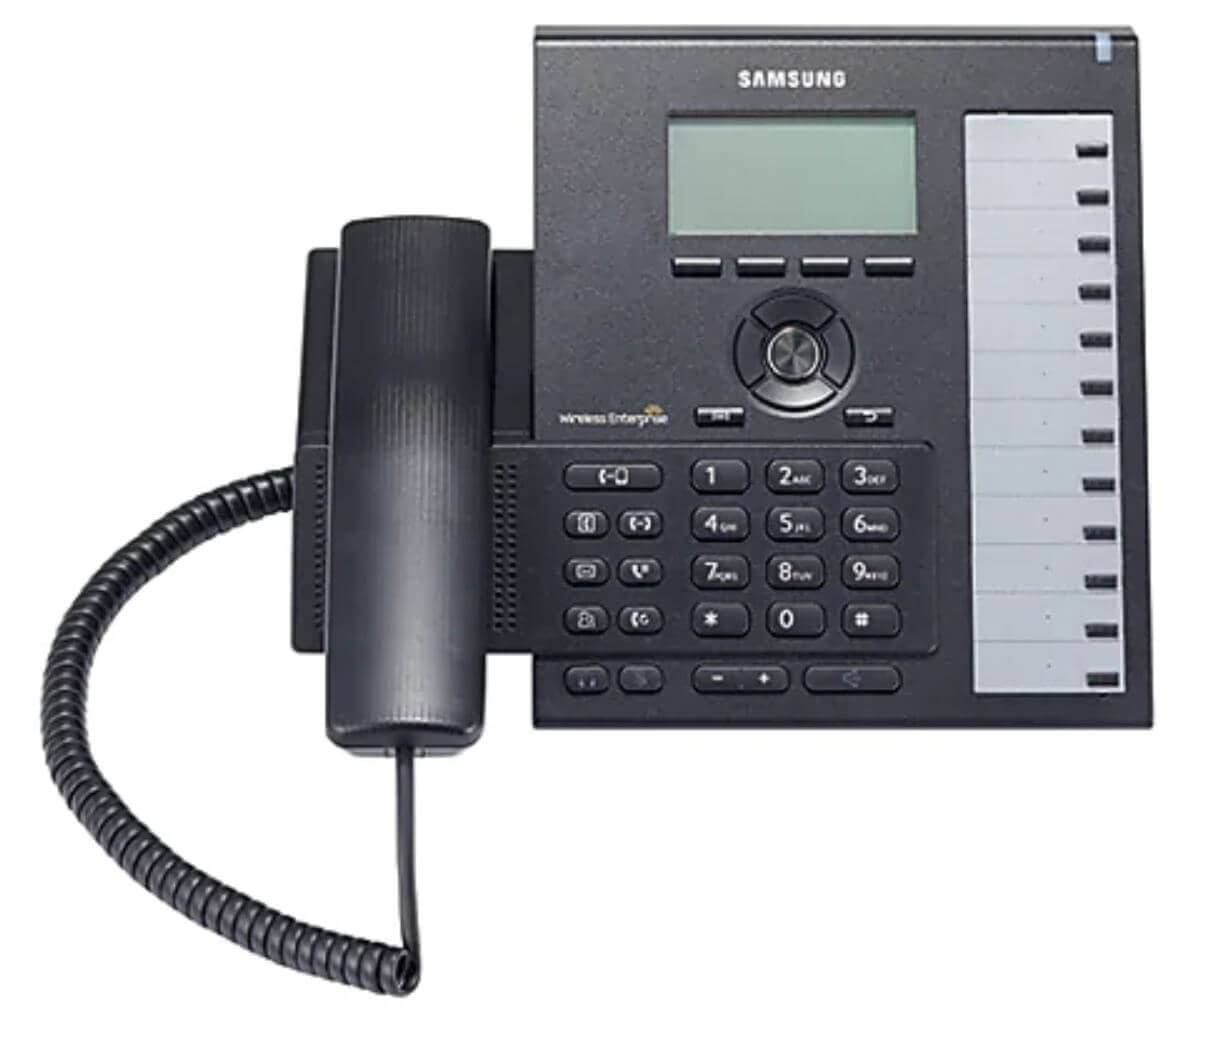 Samsung SMT-i6010 IP Phone Image